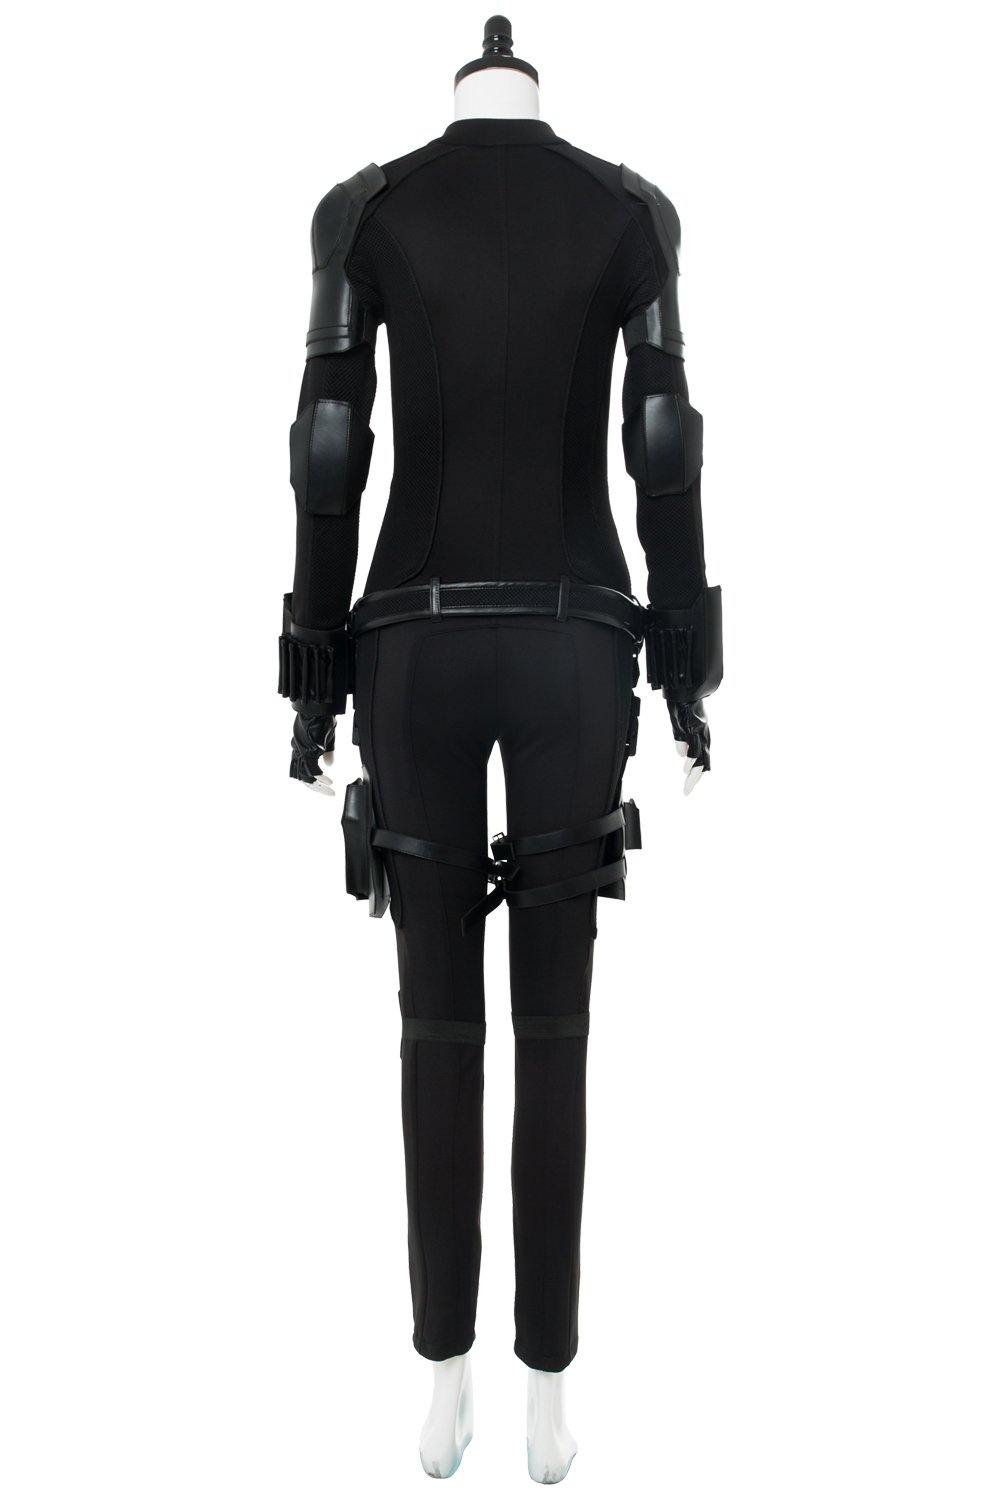 Avengers3 : Infinity War Natasha Romanoff alias Black Widow Cosplay Kostüm - cosplaycartde